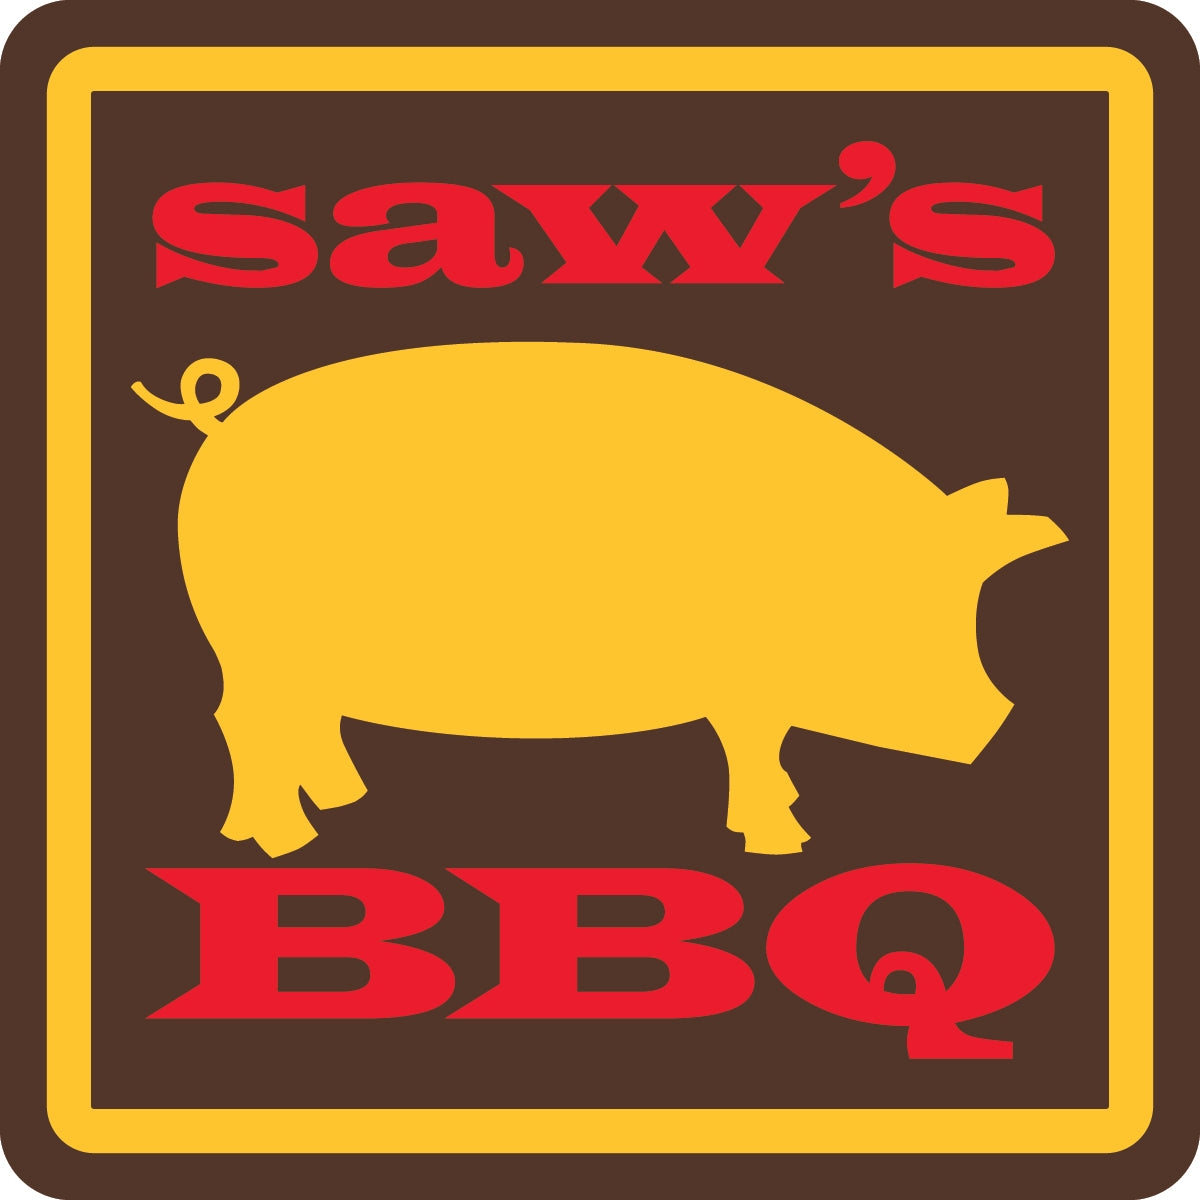 Saw's BBQ Merchandise